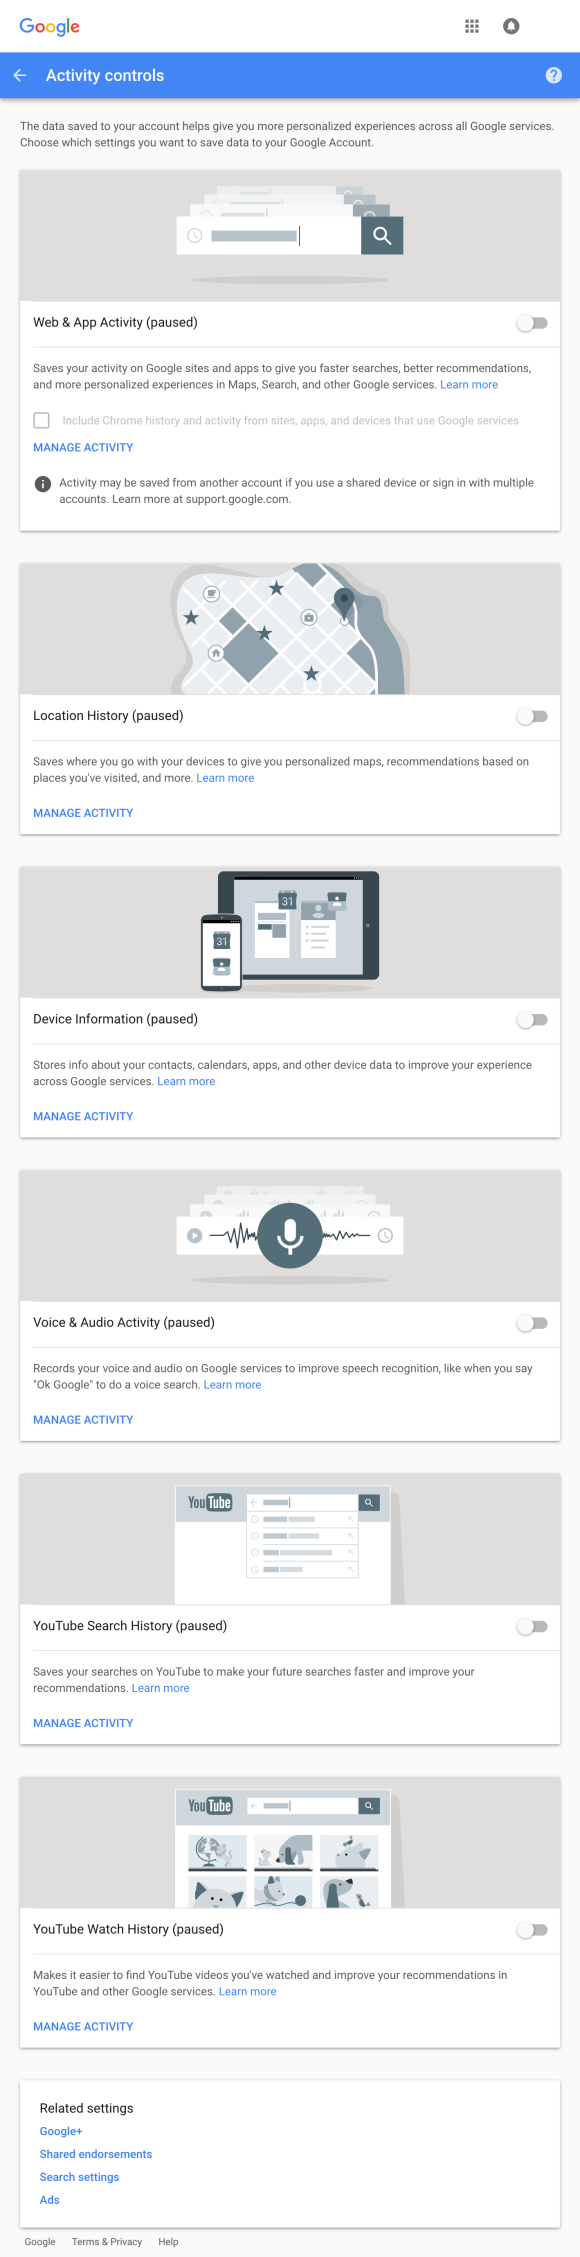 Screenshot of Google's Activity Controls permissions settings webpage